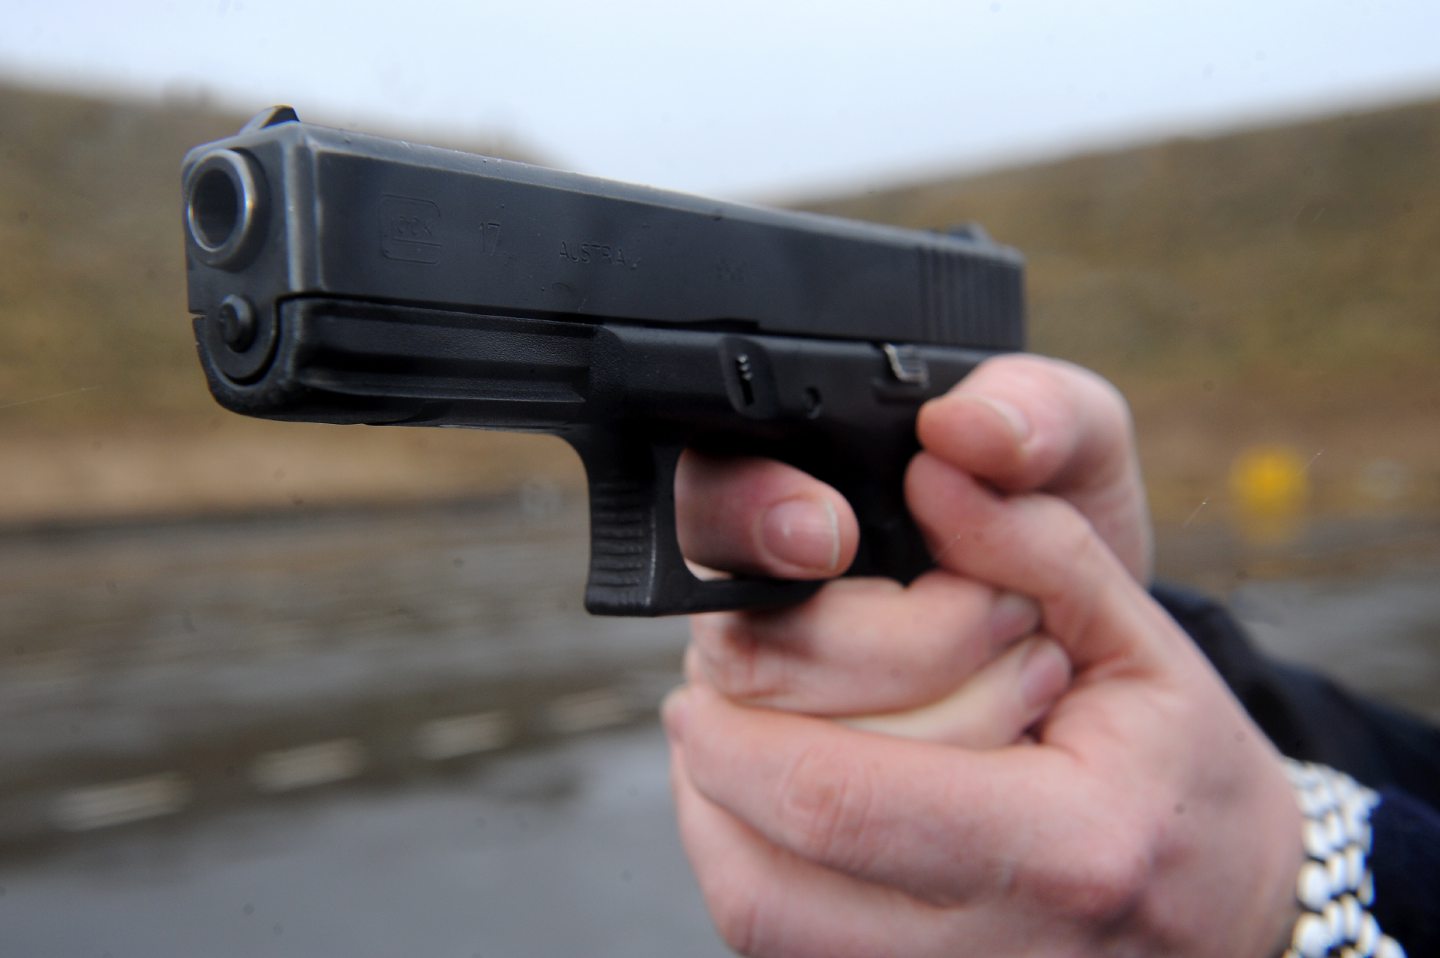 Aberdeen man who tried to import handgun jailed for 37 months